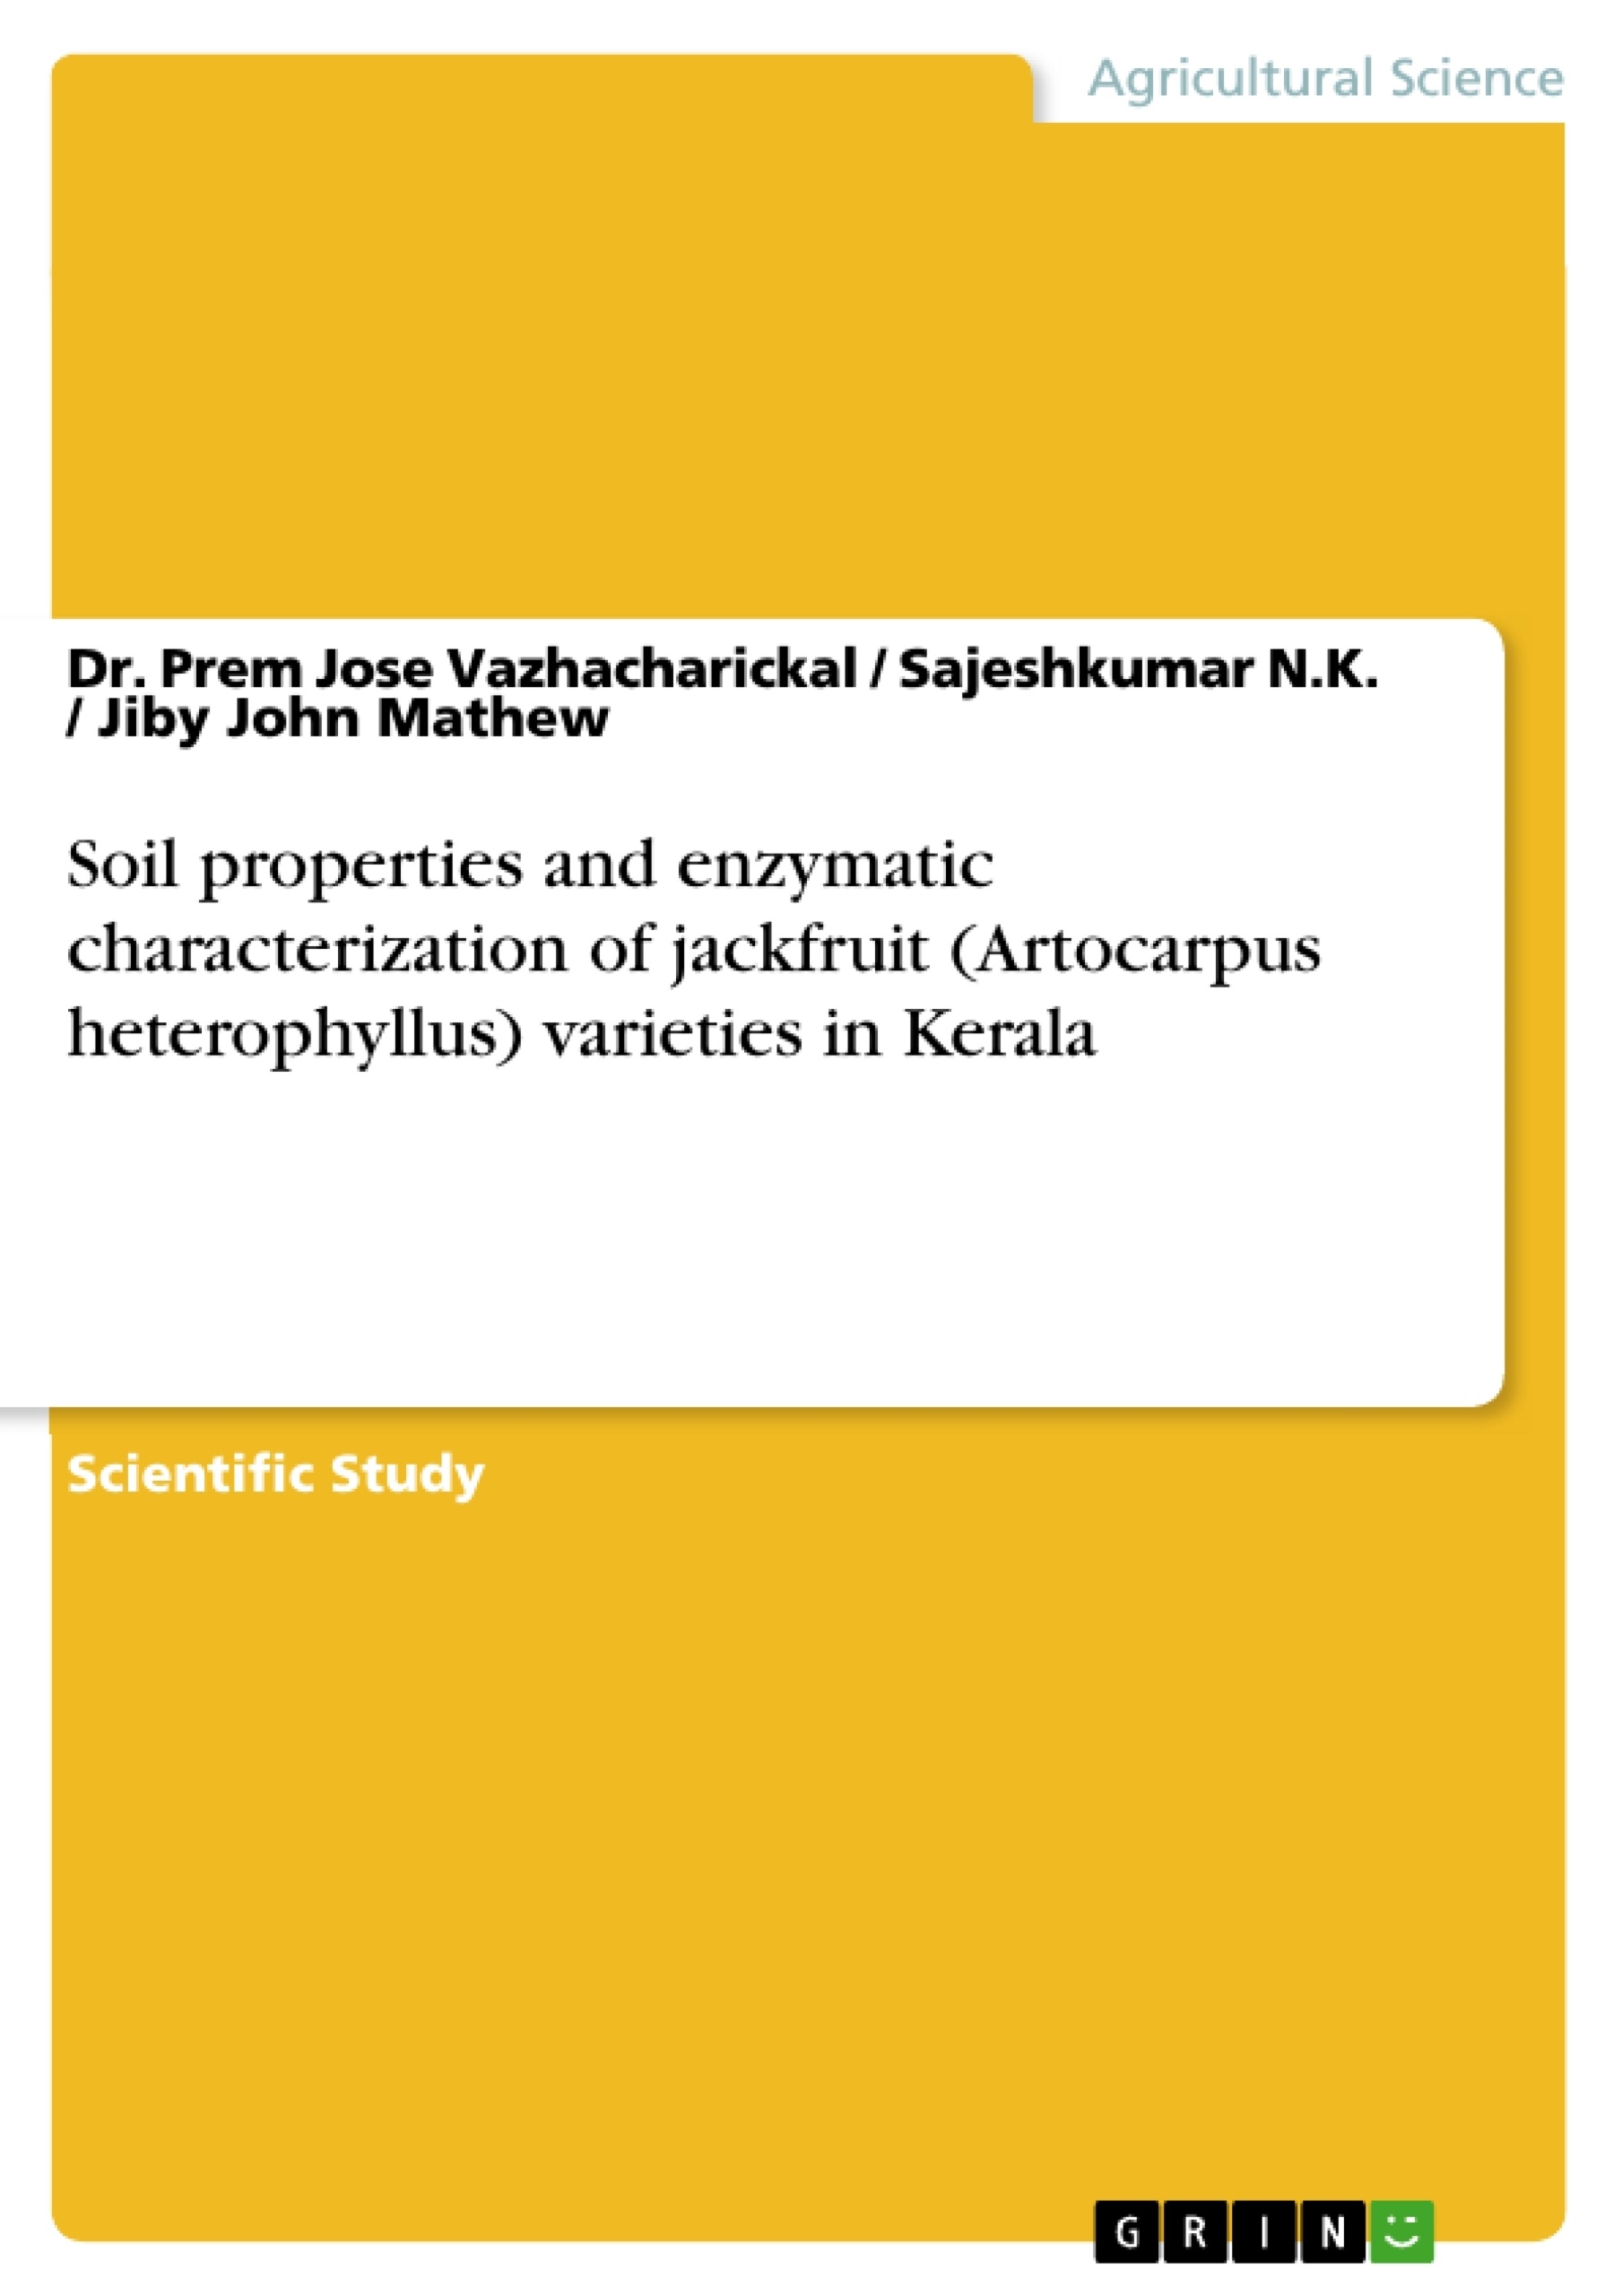 Title: Soil properties and enzymatic characterization of jackfruit (Artocarpus heterophyllus) varieties in Kerala